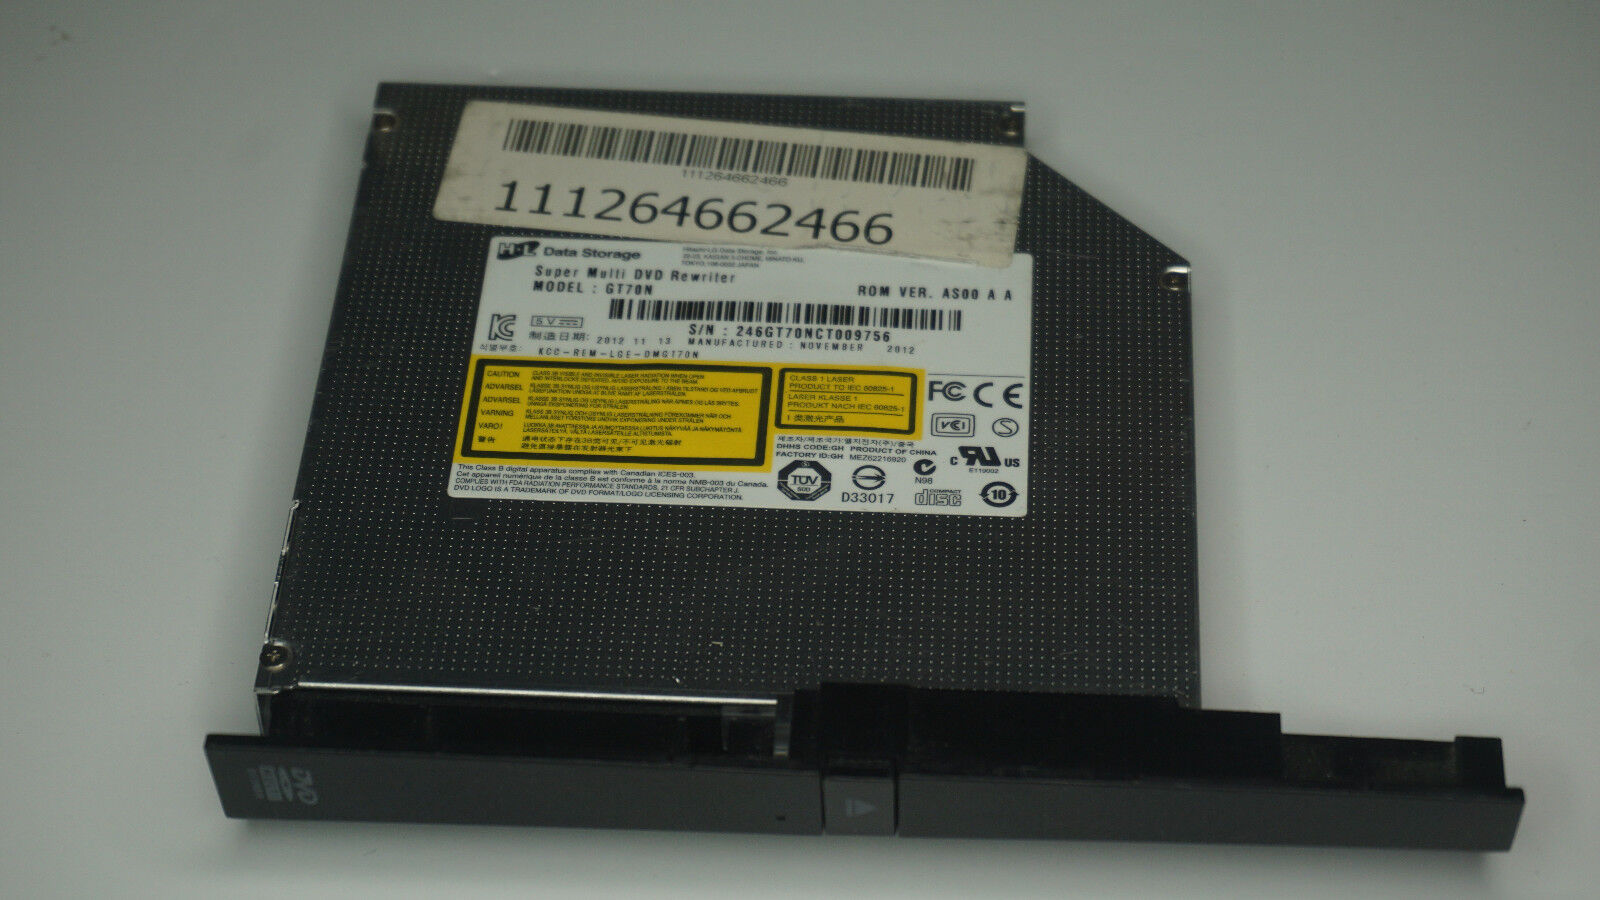 OEM ET2220 H-D Data Storage GT70N  Multi DVD Drive Burner from ASUS ET2220i AIO